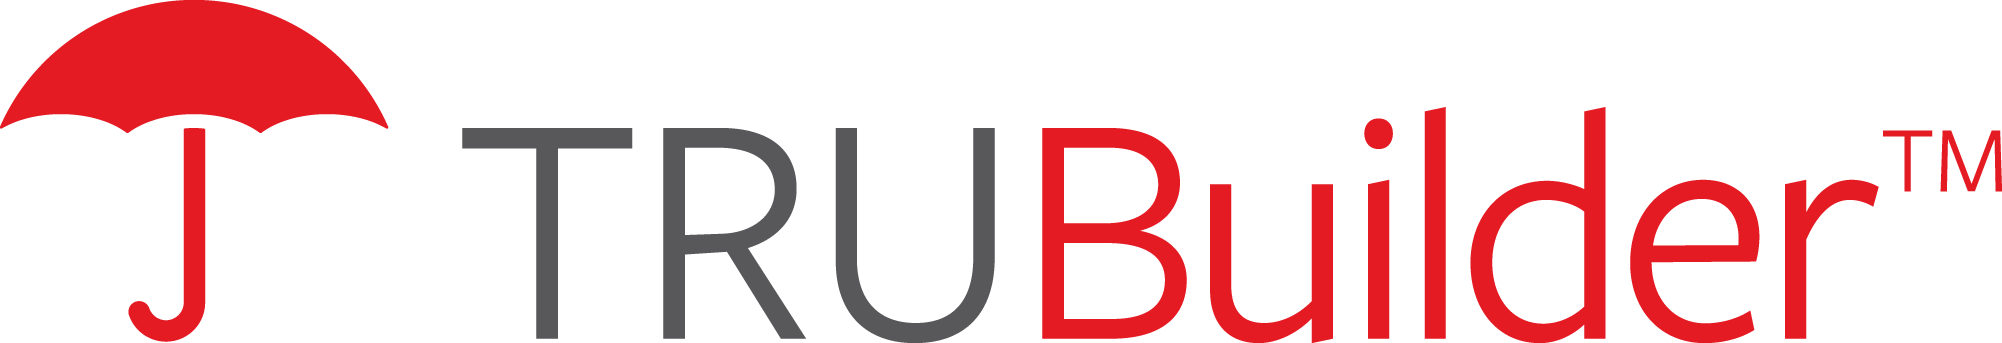 Appareils avec le logo TRU Builder